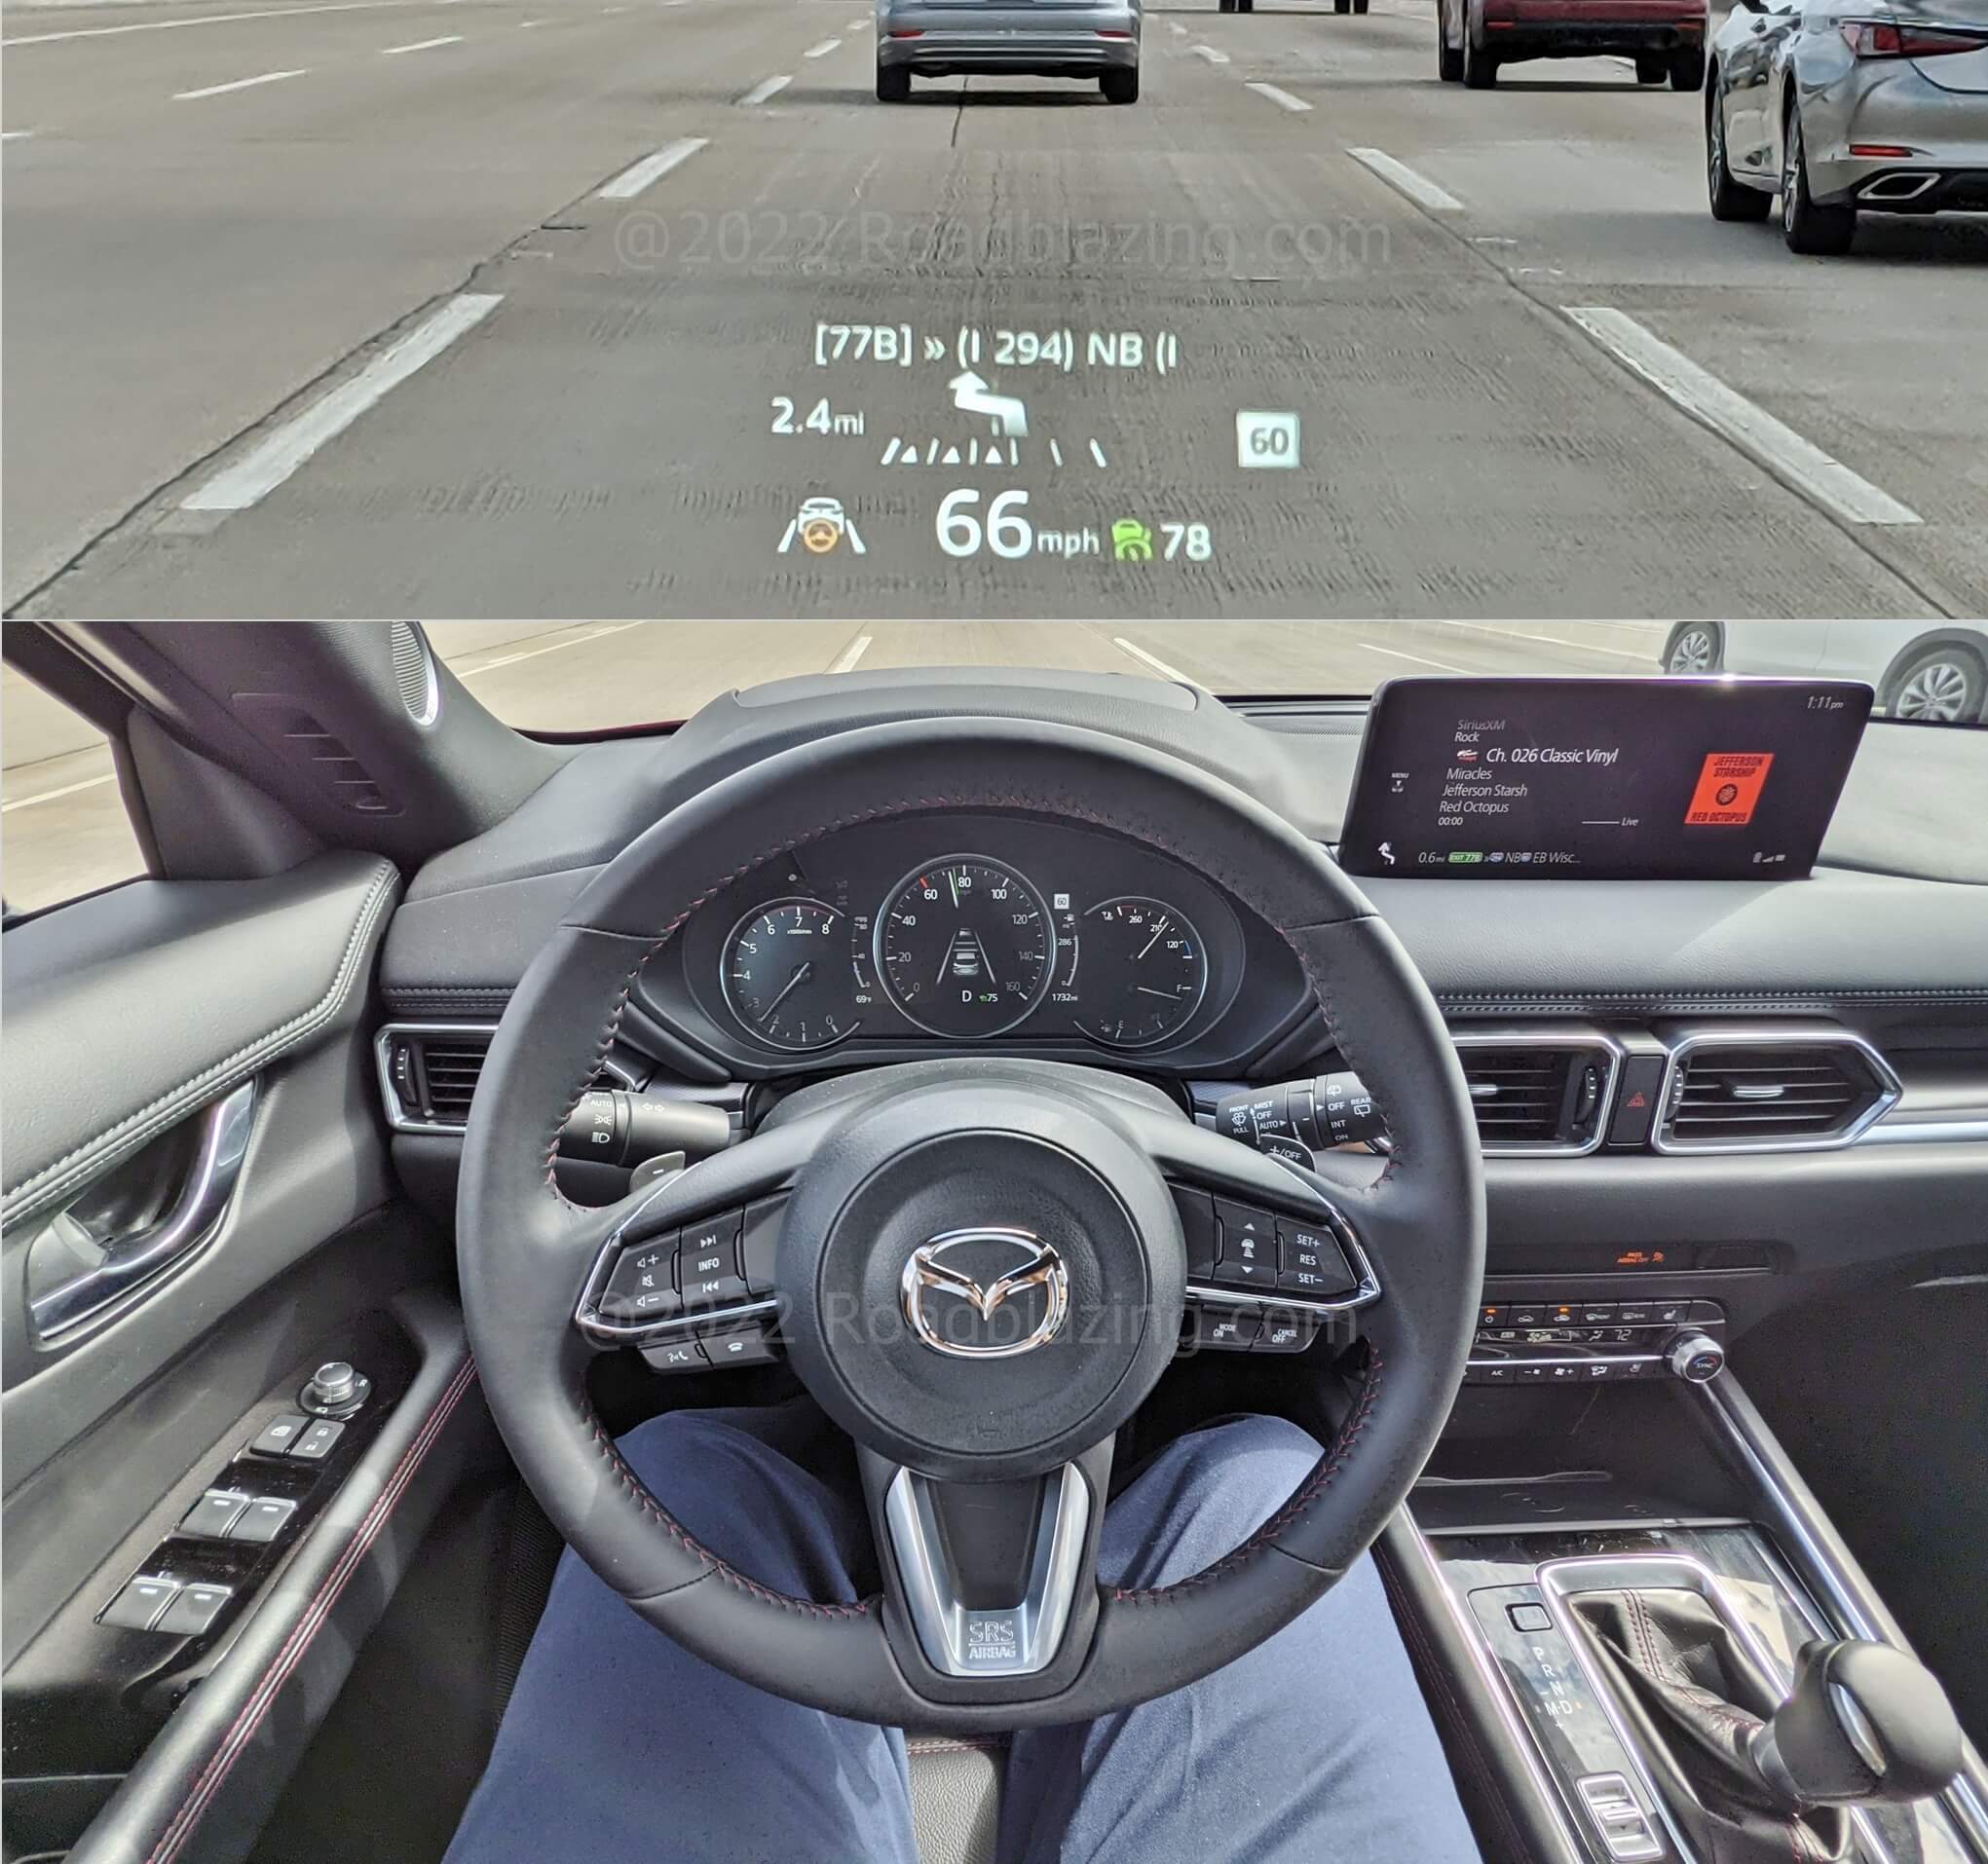 2022 Mazda CX-5 2.5T Turbo AWD: HUD, gauges and media screen display full adaptive cruise control, lane keep assist and navigation cues